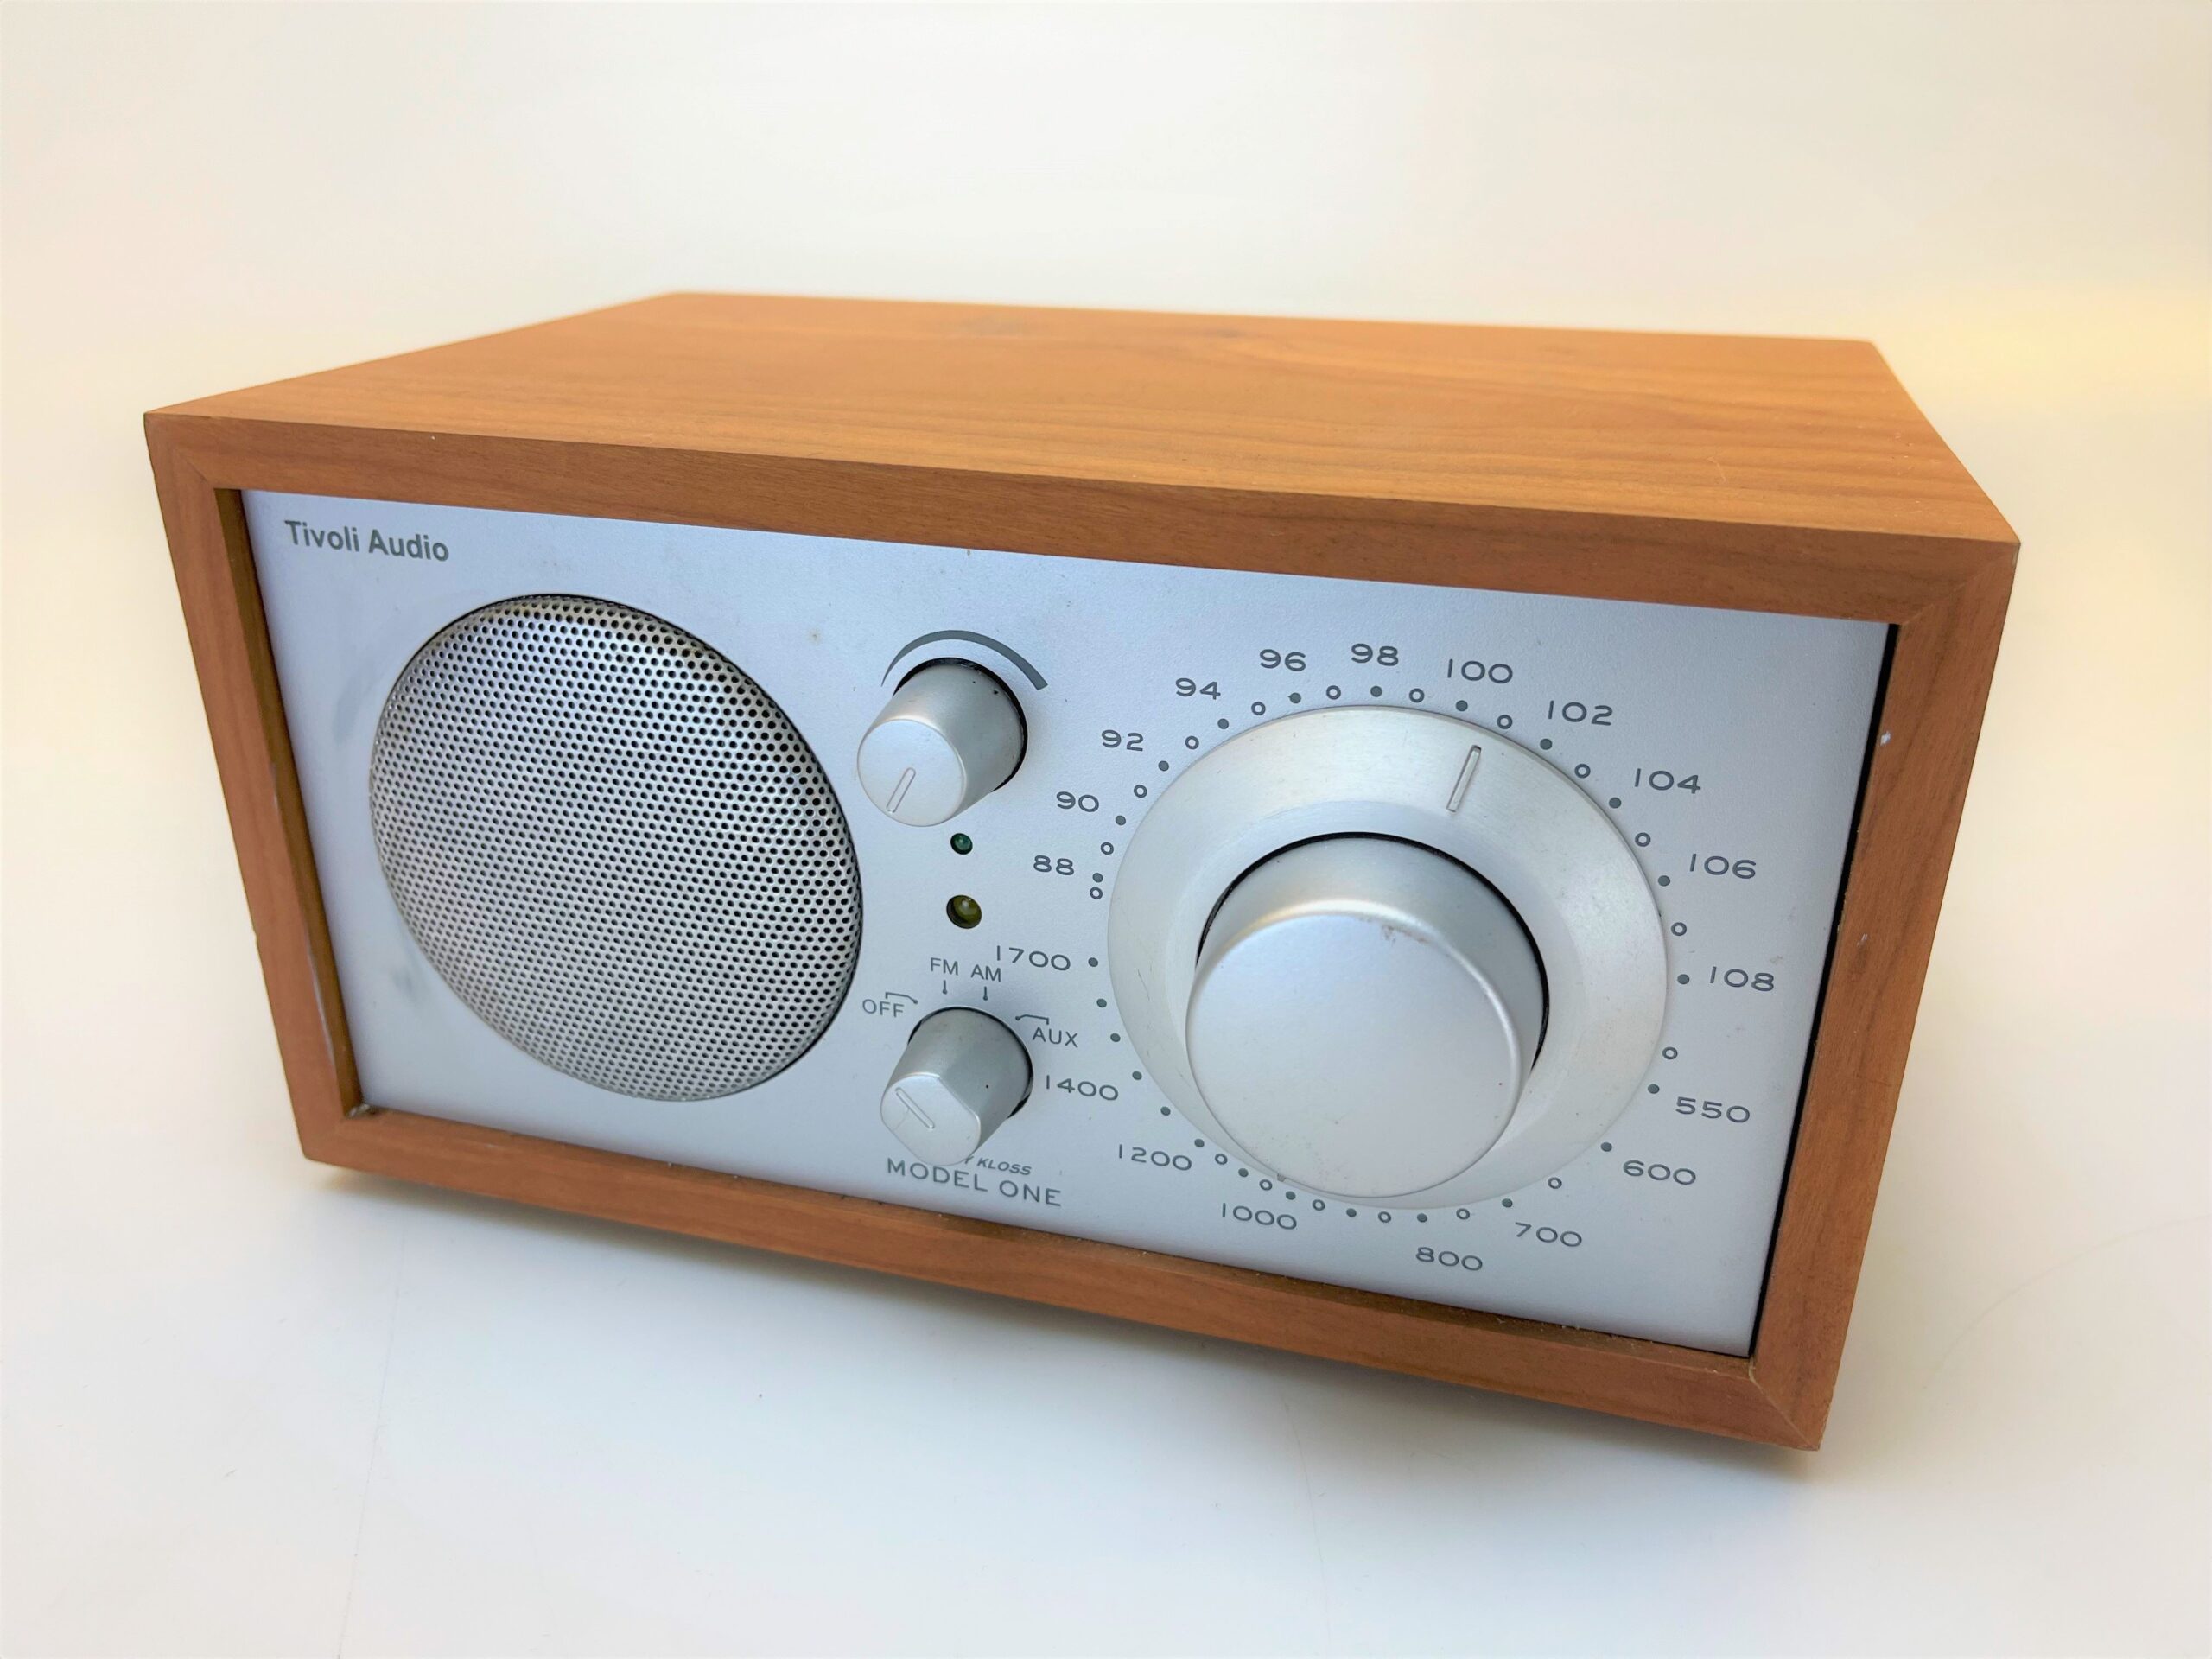 tivoli audio model one